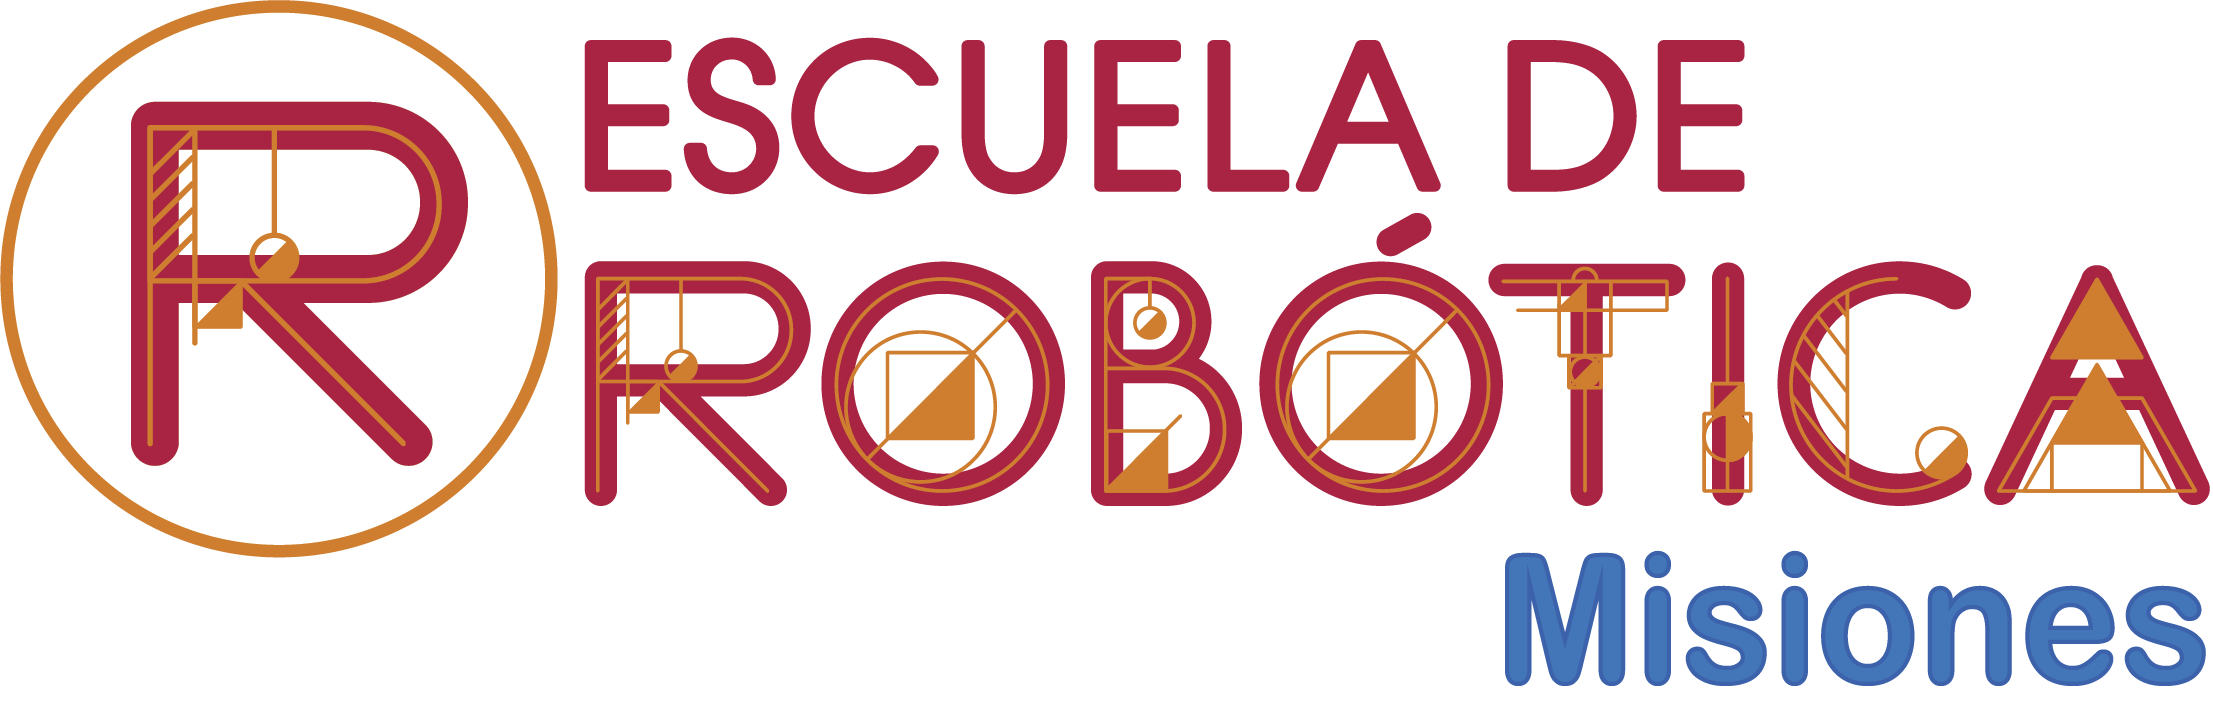 LOGO Escuela Robotica